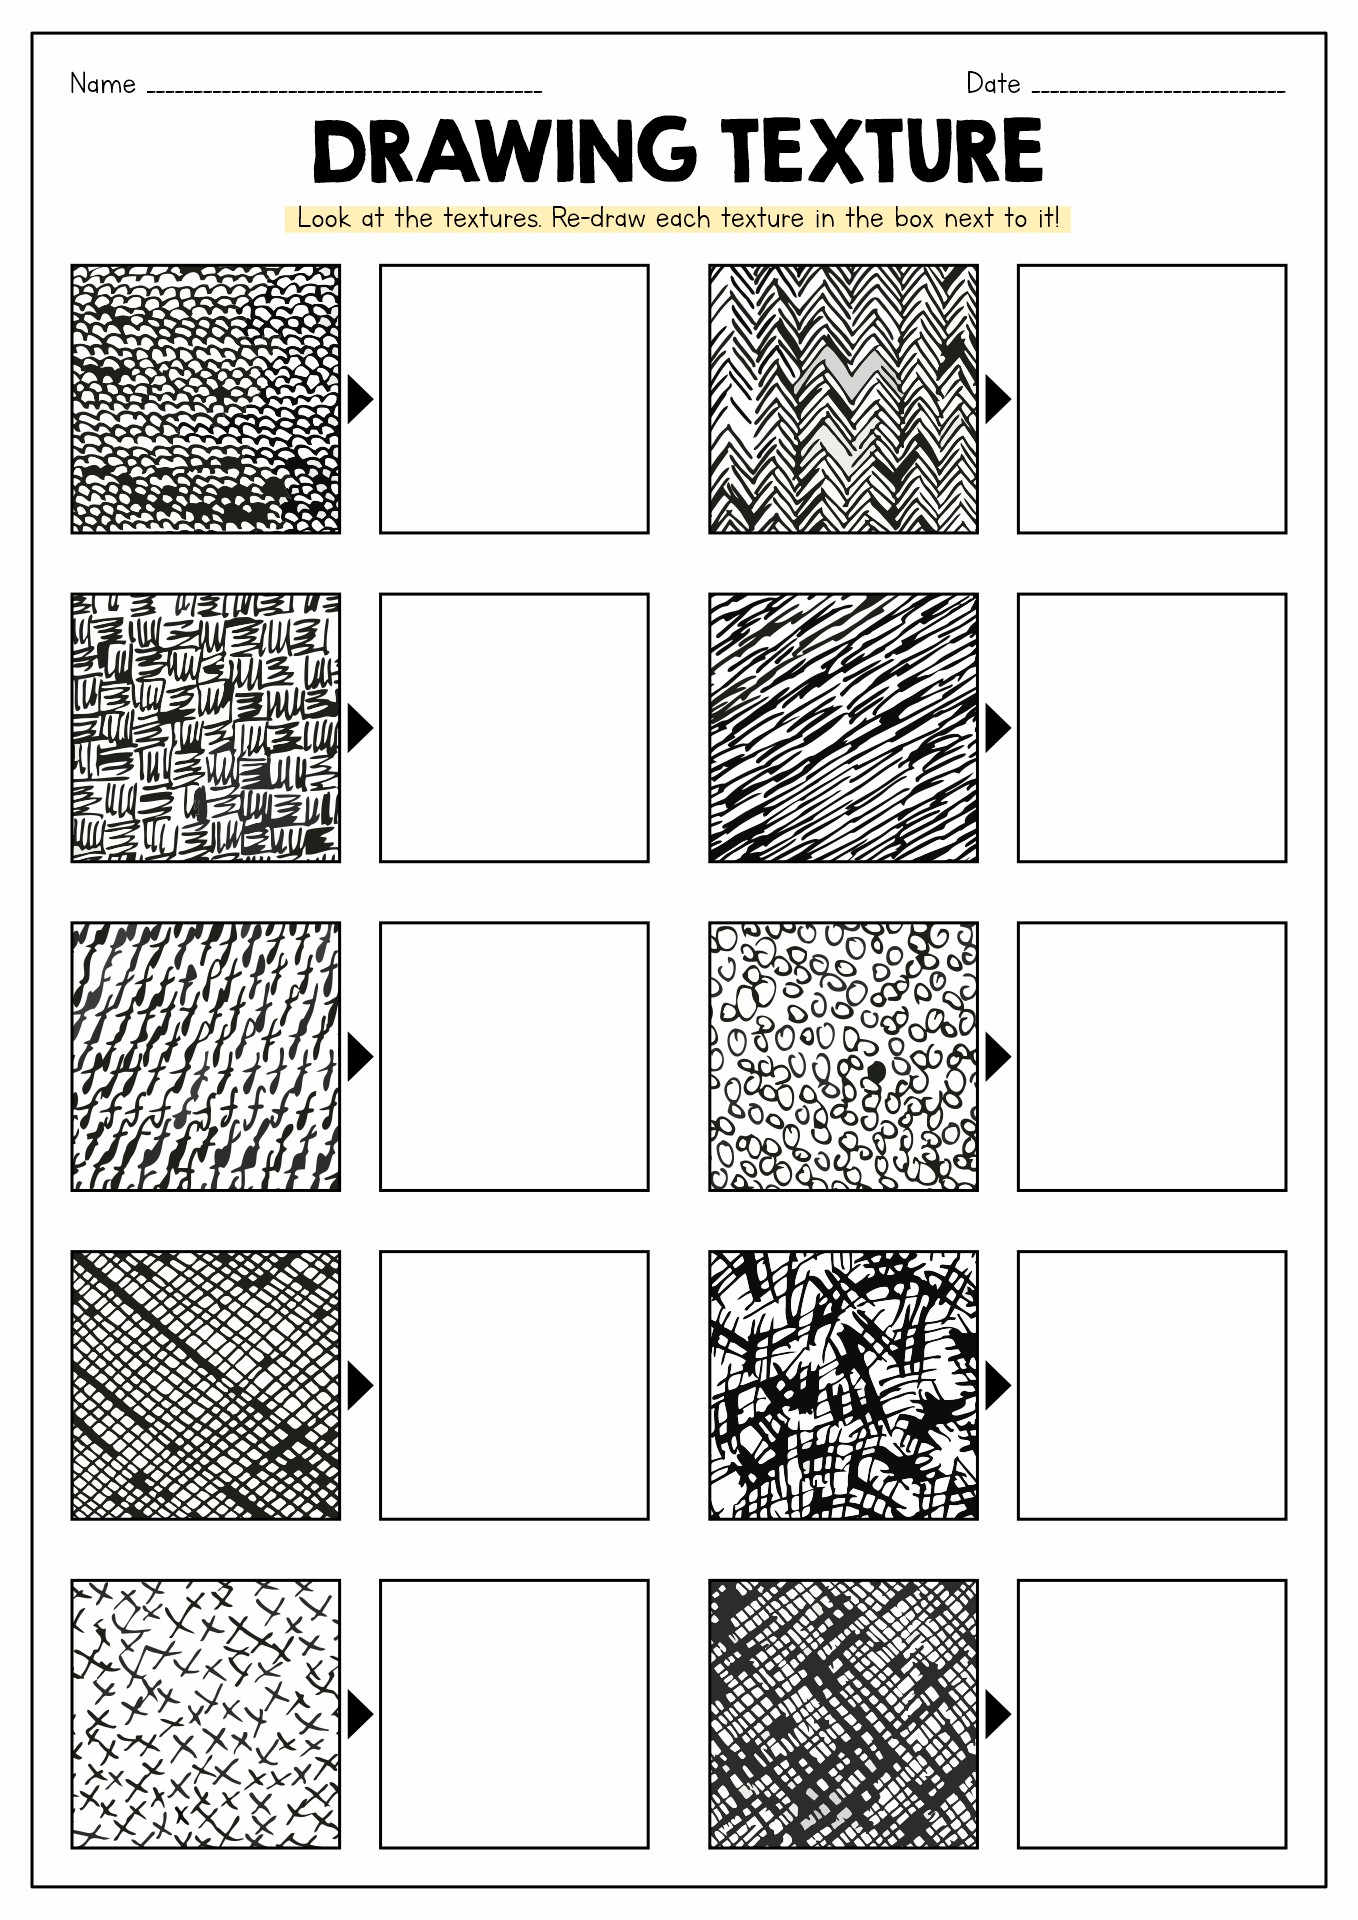 Drawing Texture Worksheet